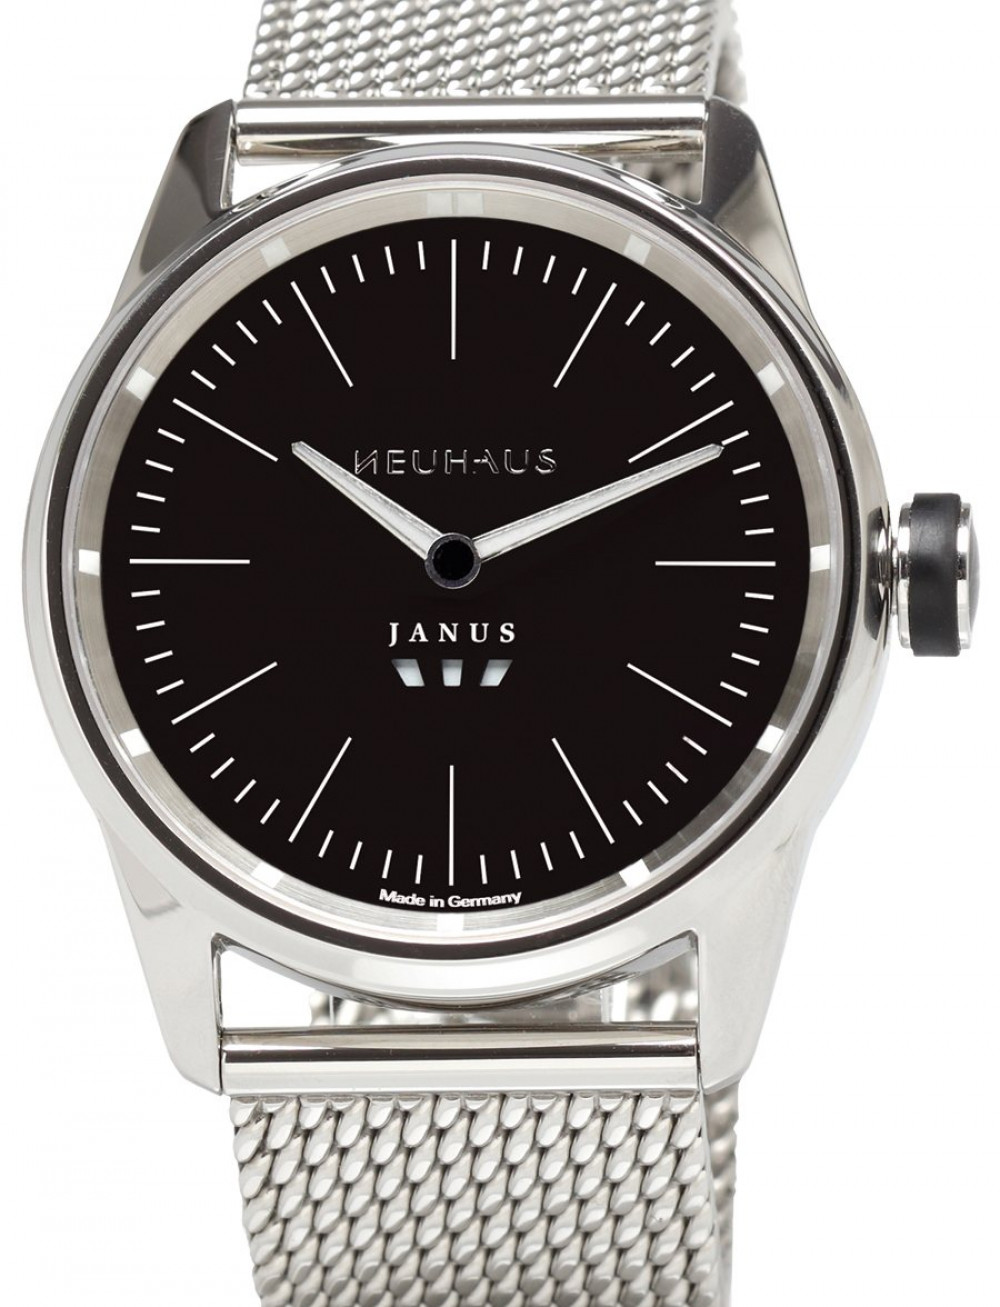 Zegarek firmy Neuhaus, model Janus minimal